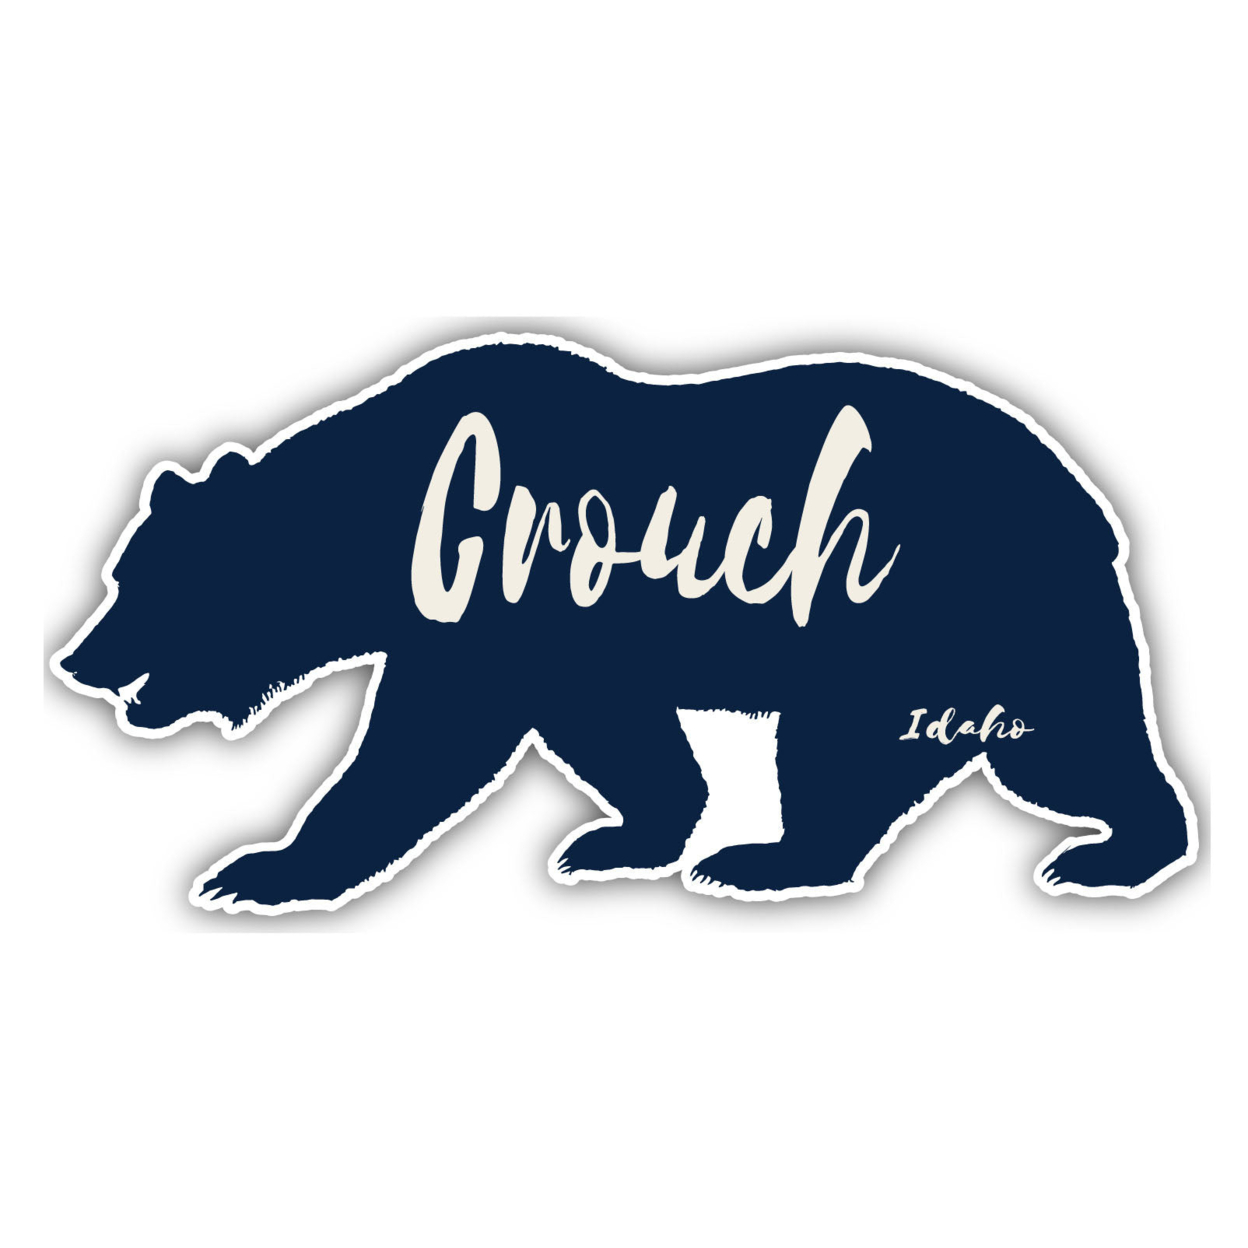 Crouch Idaho Souvenir Decorative Stickers (Choose Theme And Size) - Single Unit, 10-Inch, Bear